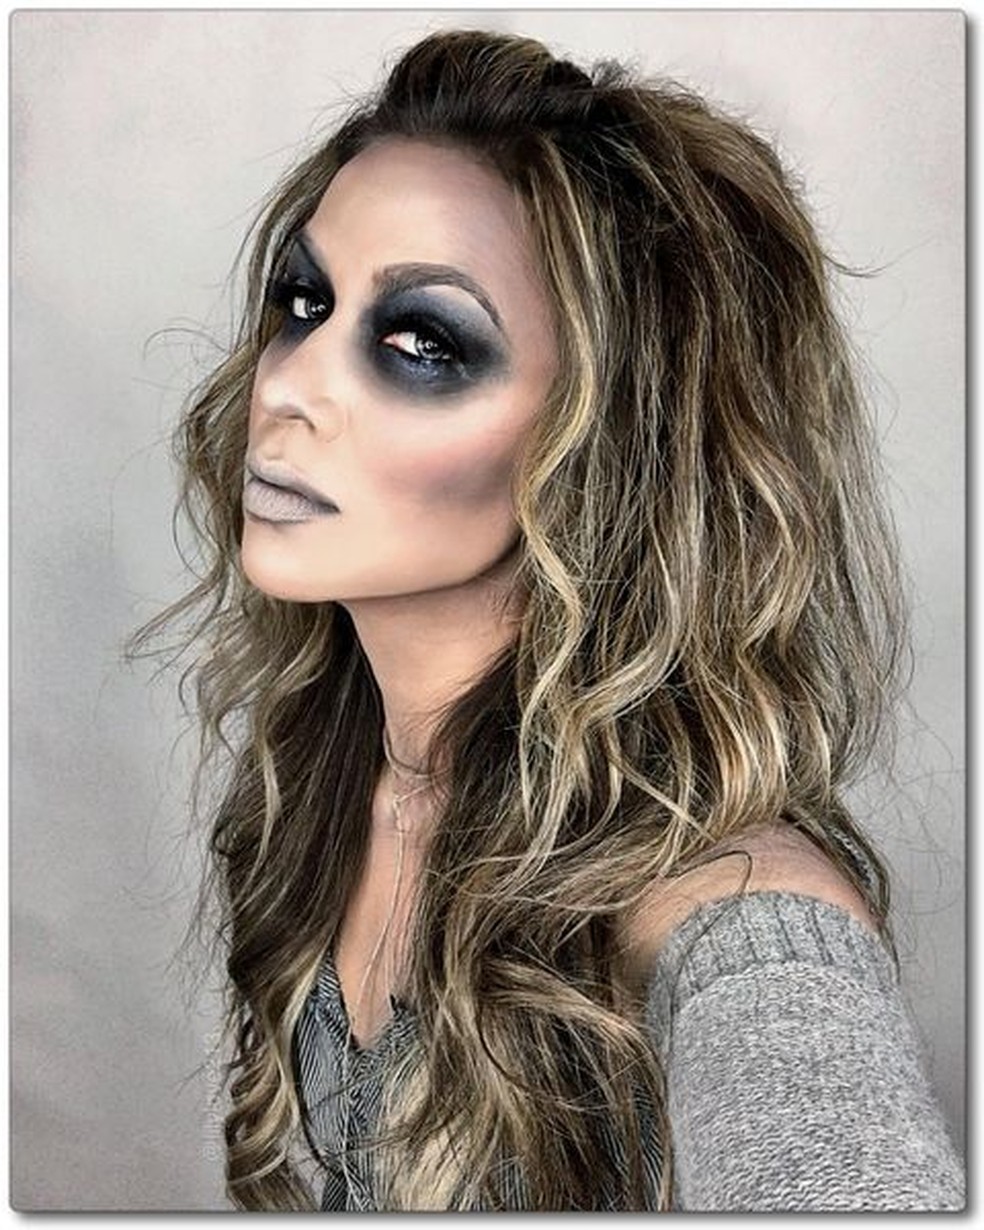 Cursos de Maquiagem para Halloween 2022 - Cursos de Makeup